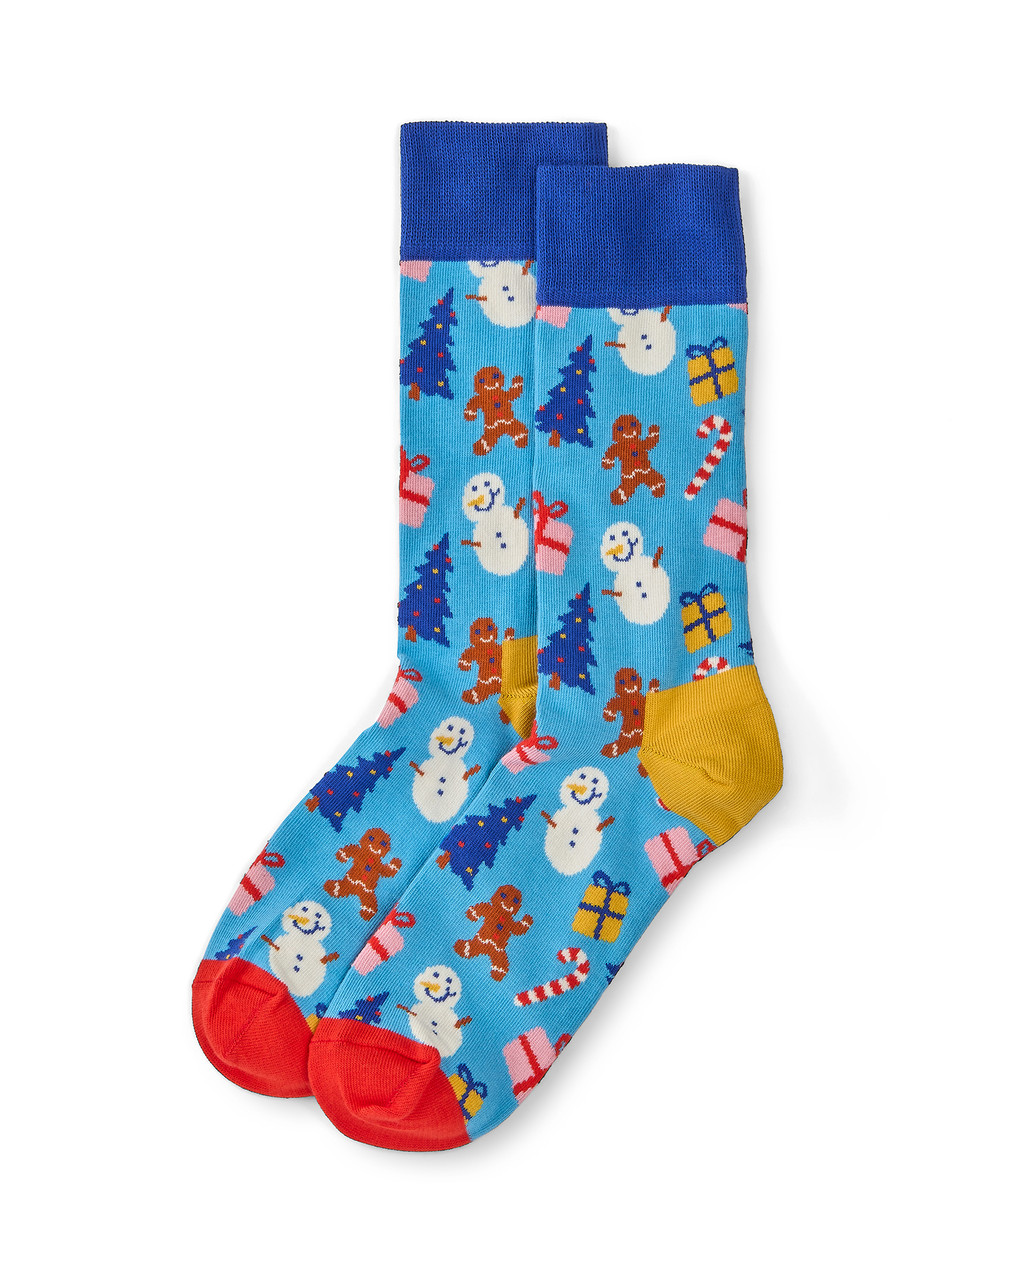 3-Pack Adult Tree Holiday Socks Gift Set